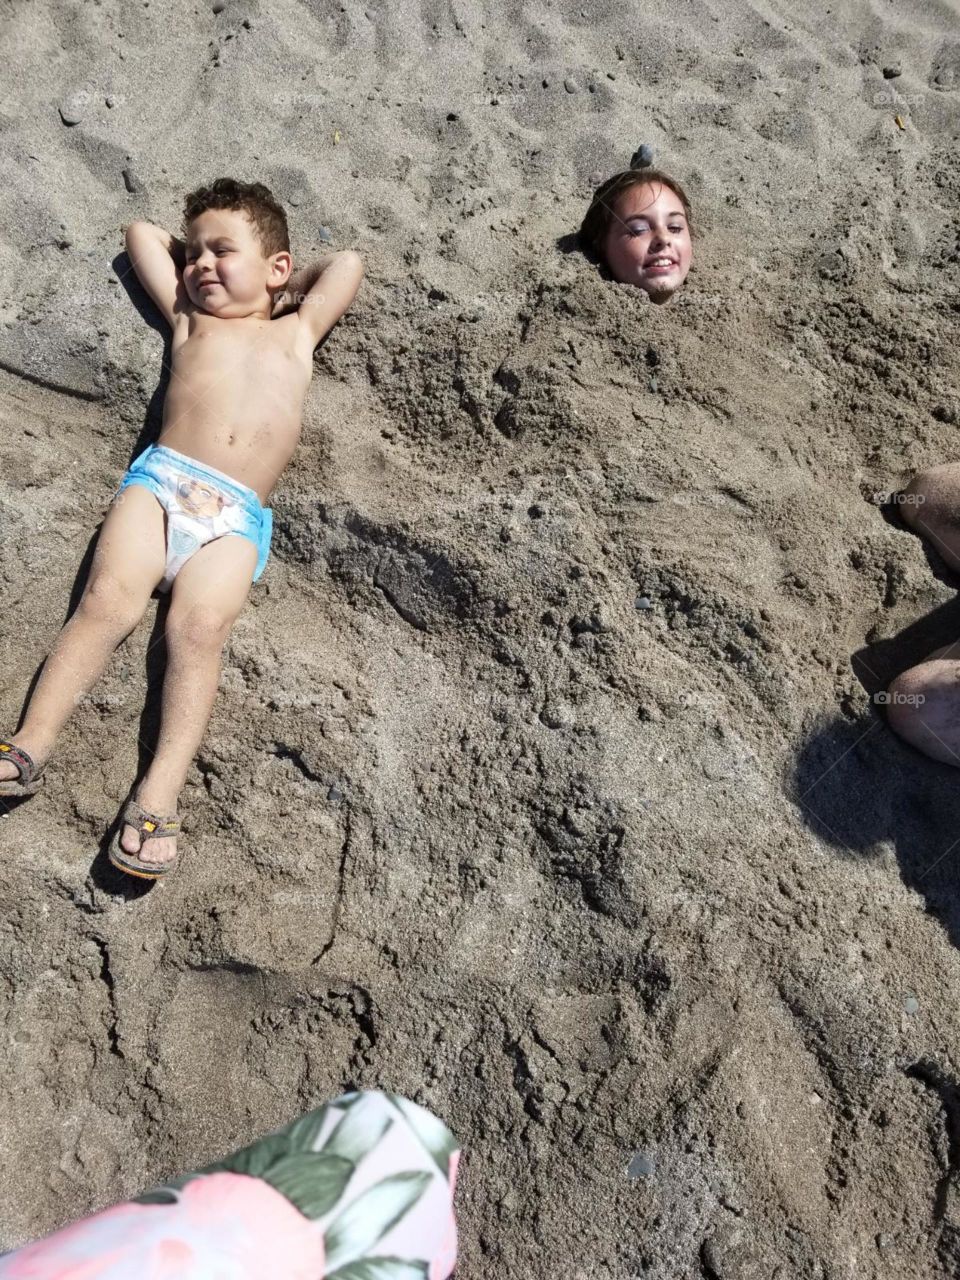 Beach summertime fun a kid buried and a kid tanning 